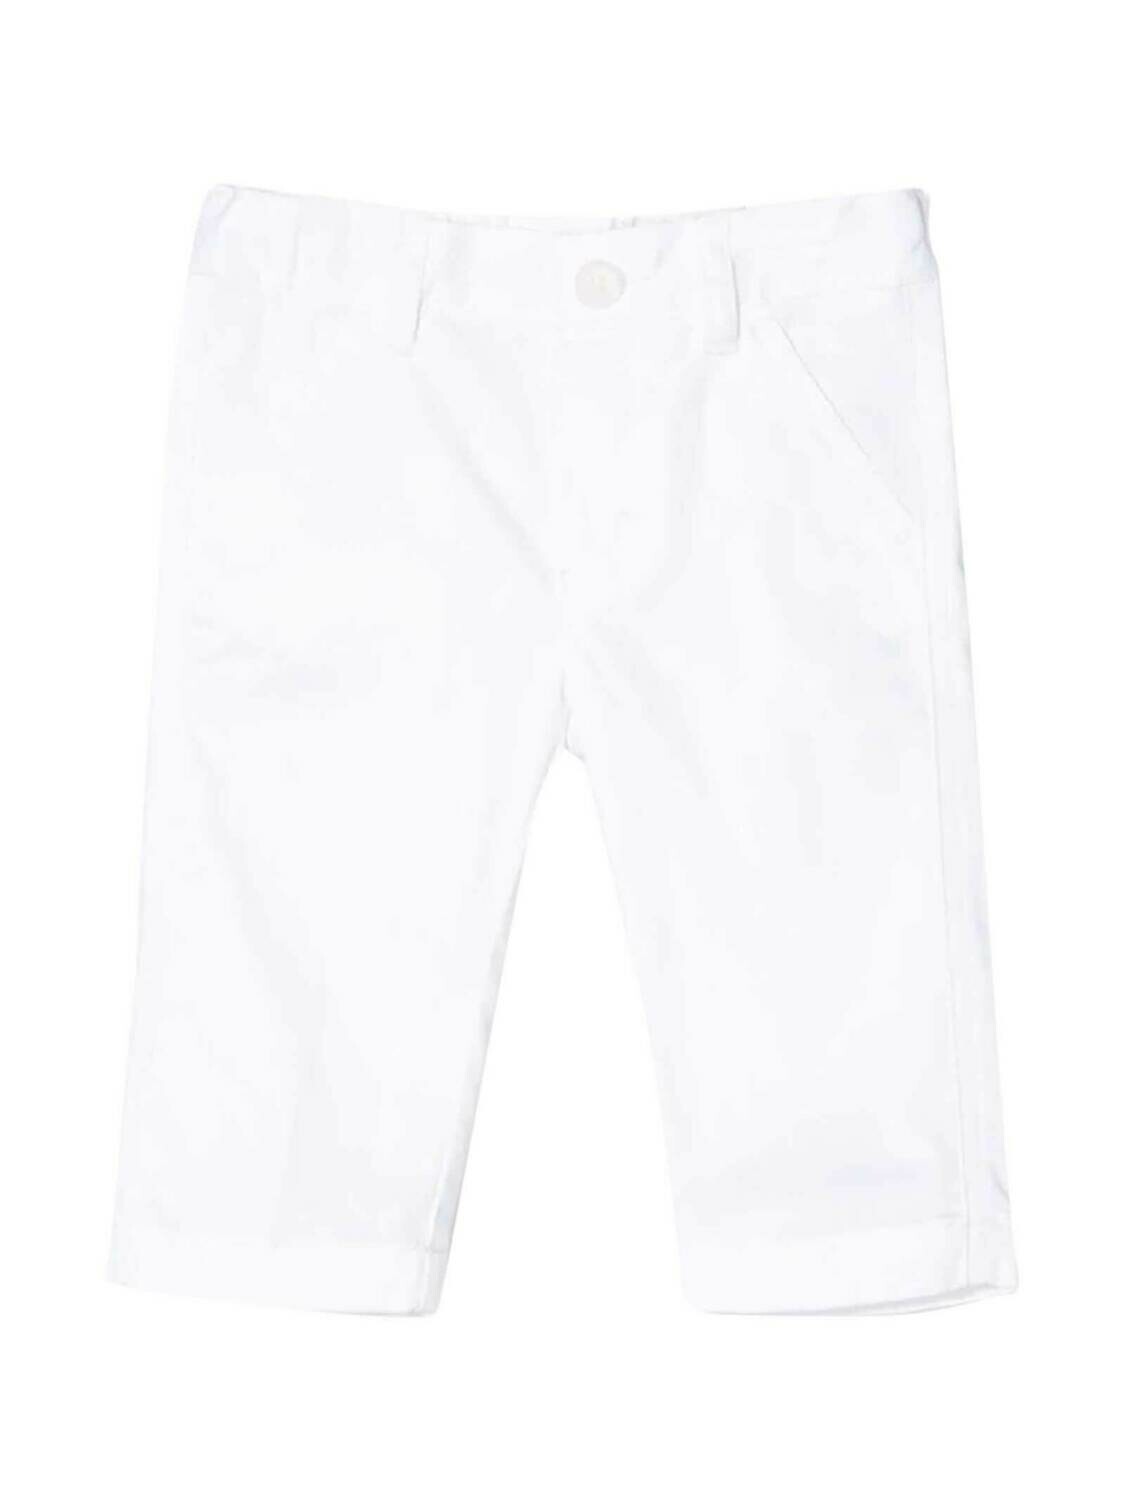 Il Gufo - Pantalone lungo bianco